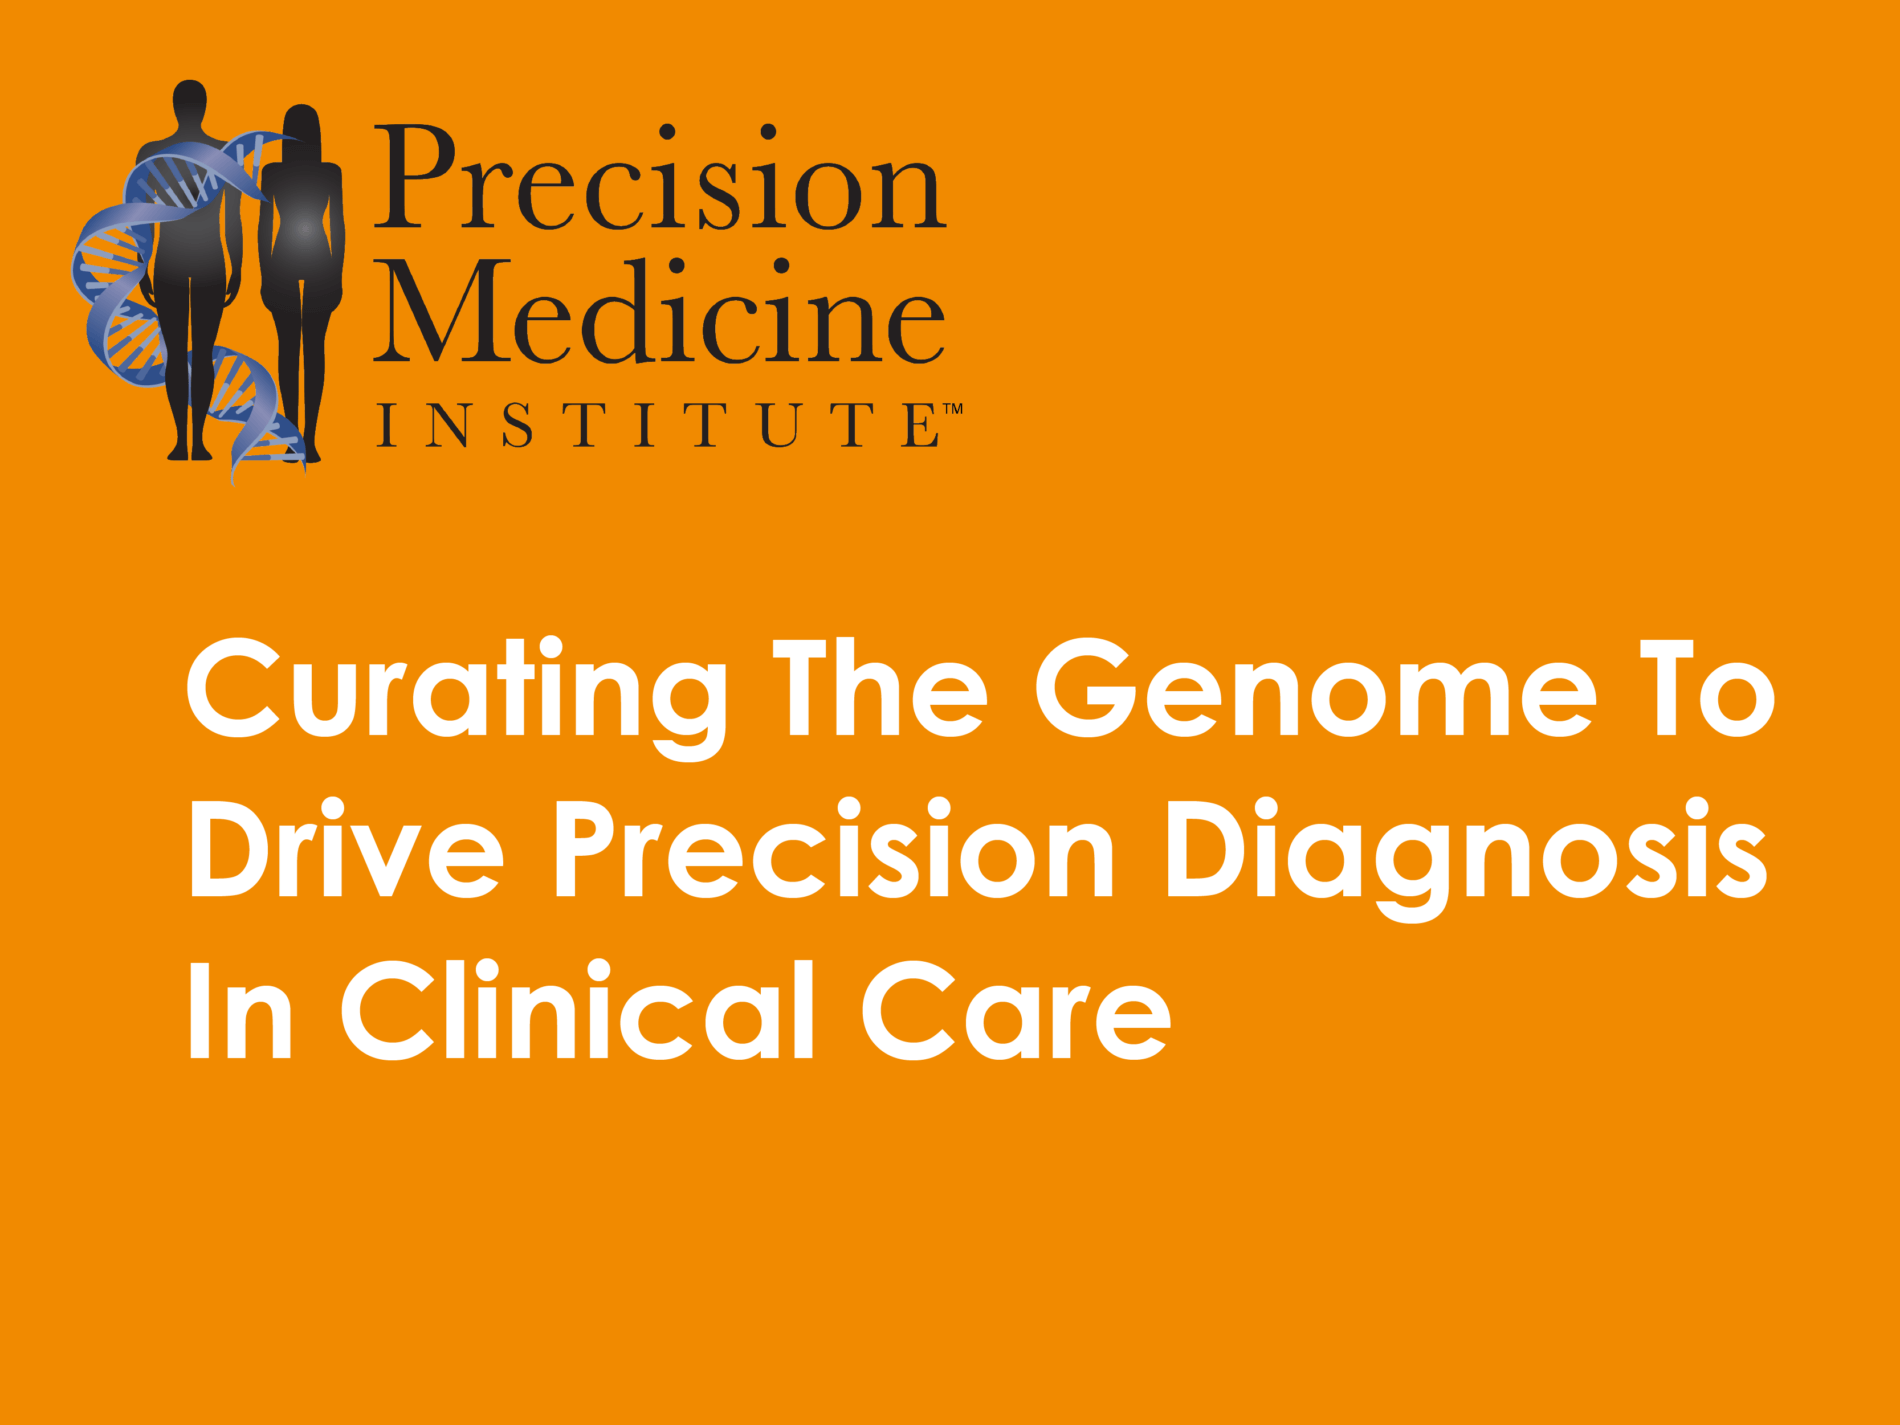 LATEST TALKS<h5>Curating The Genome To Drive Precision Diagnosis In Clinical Care</b><br><h6><b>PRECISION MEDICINE INSTITUTE</h6></b>